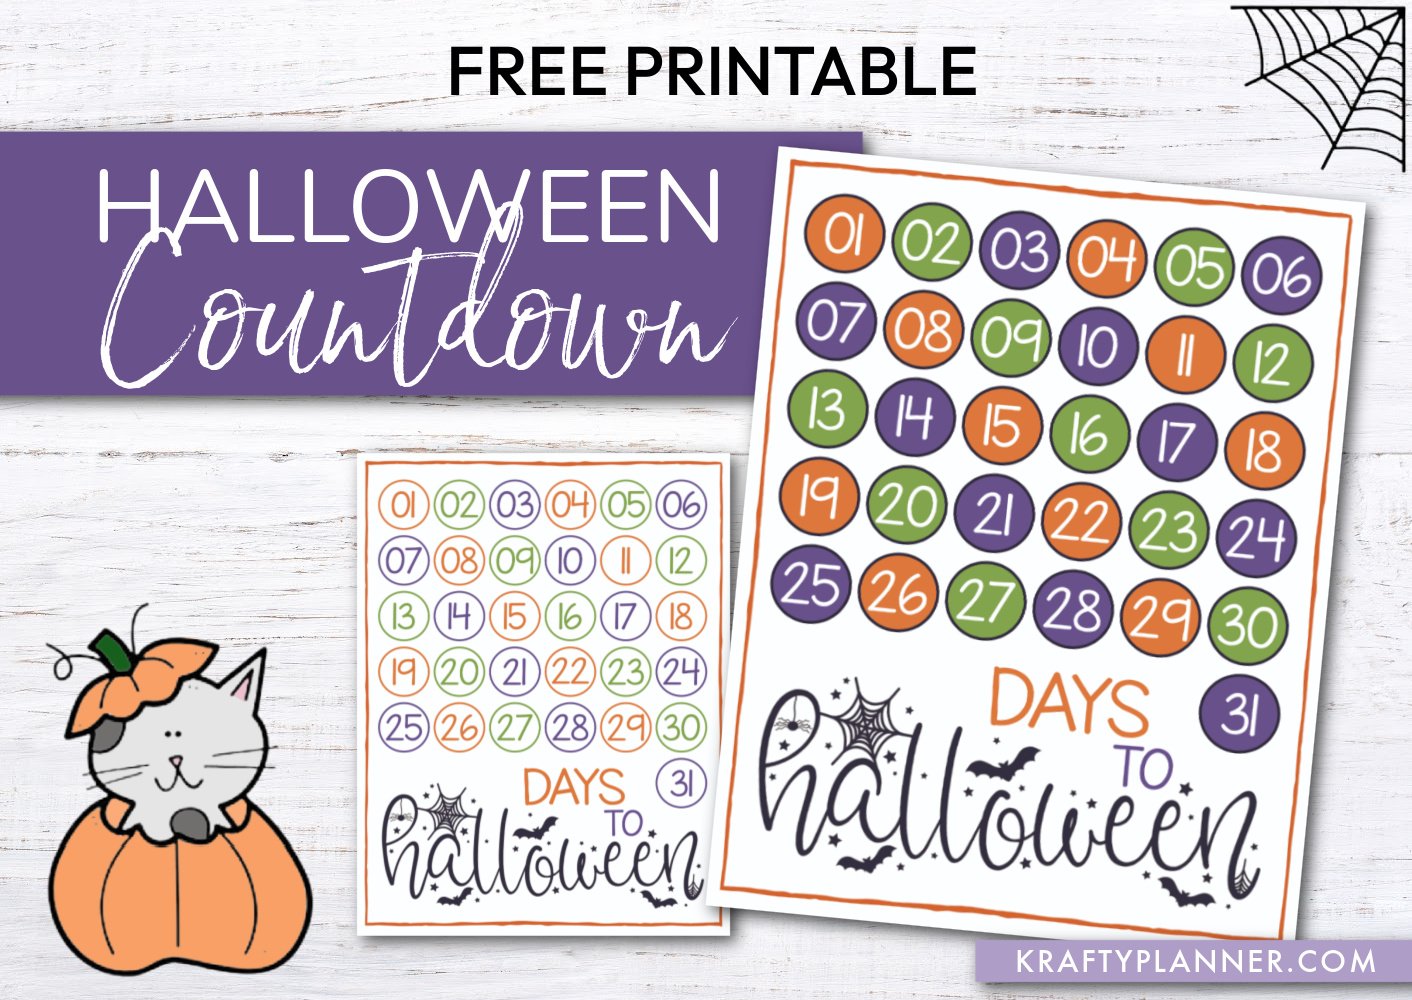 Halloween Countdown Calendar Free Printable (1).jpg